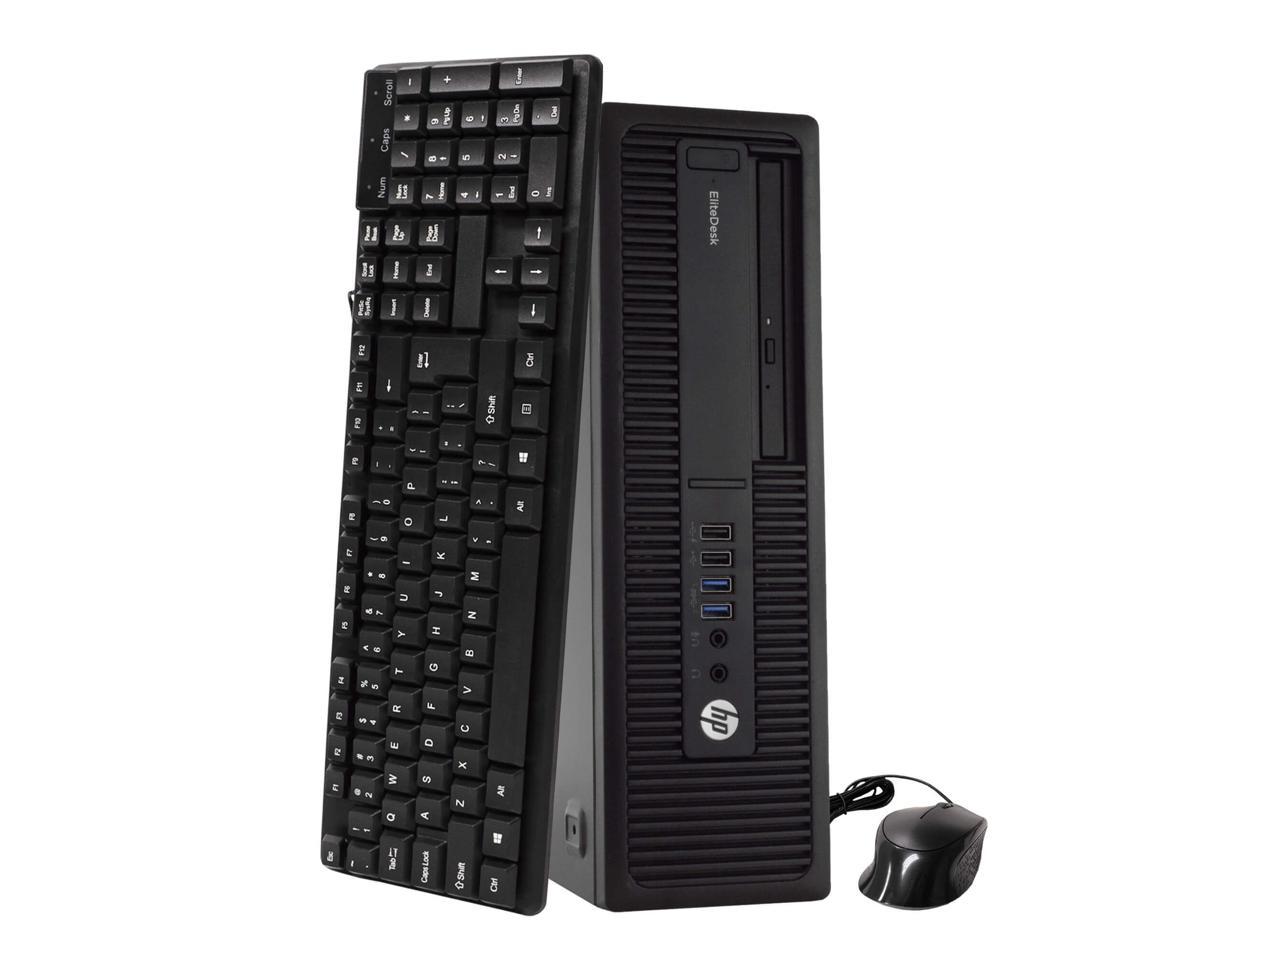 HP EliteDesk 800 G2 Refurbished (SFF) Quad-Core Desktop PC